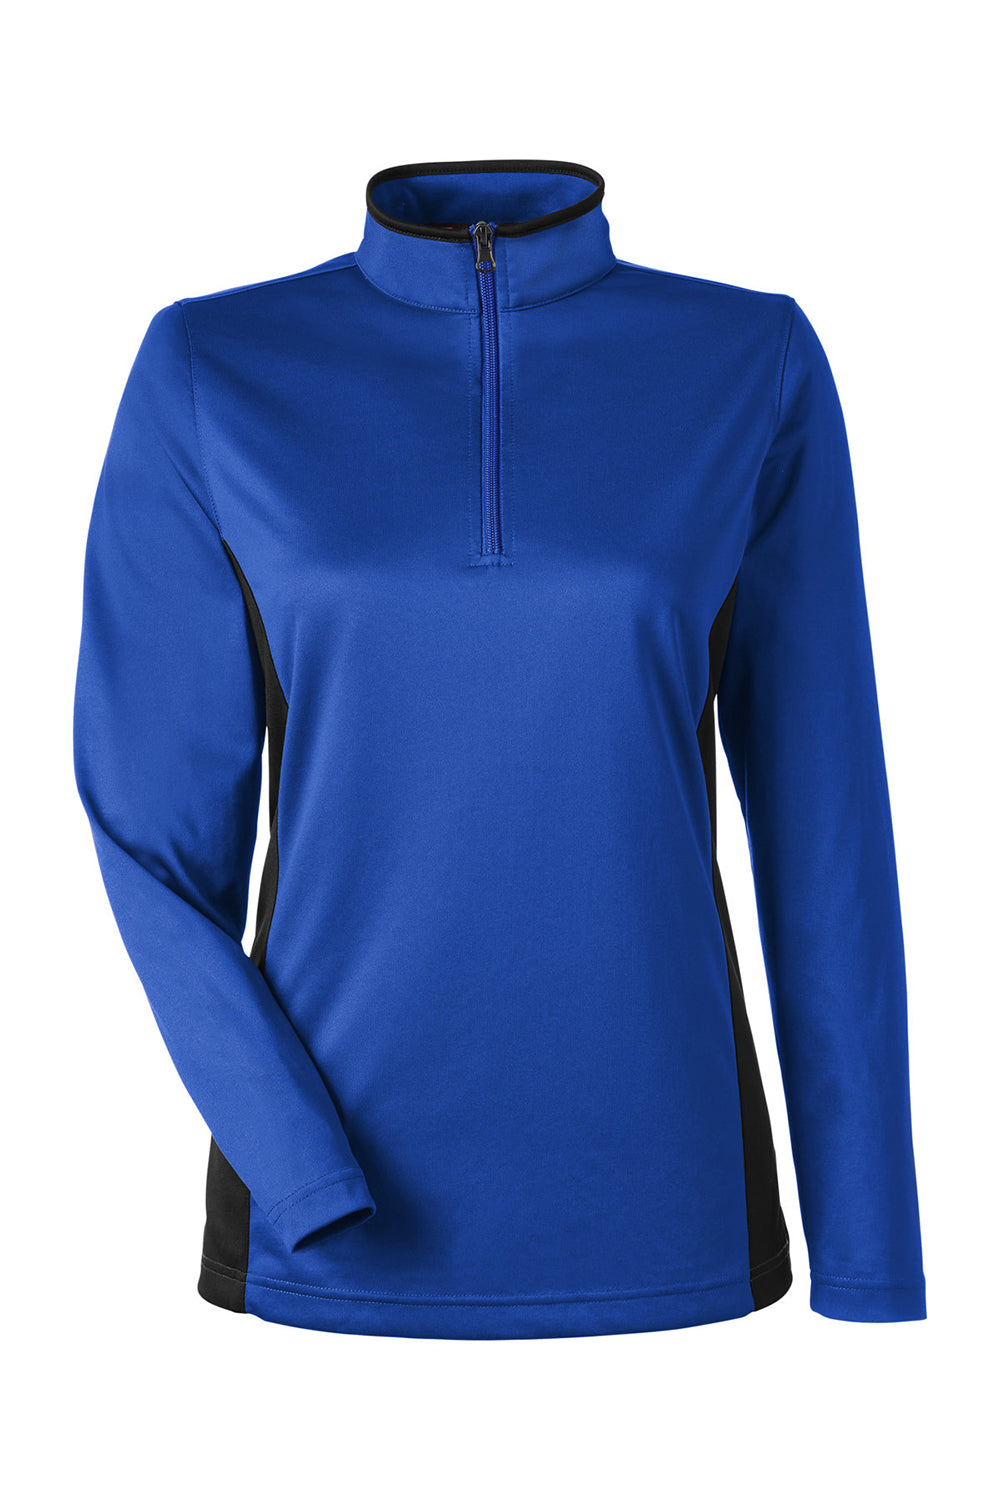 Harriton M786W Womens Flash Performance Moisture Wicking Colorblock 1/4 Zip Sweatshirt True Royal Blue/Black Flat Front